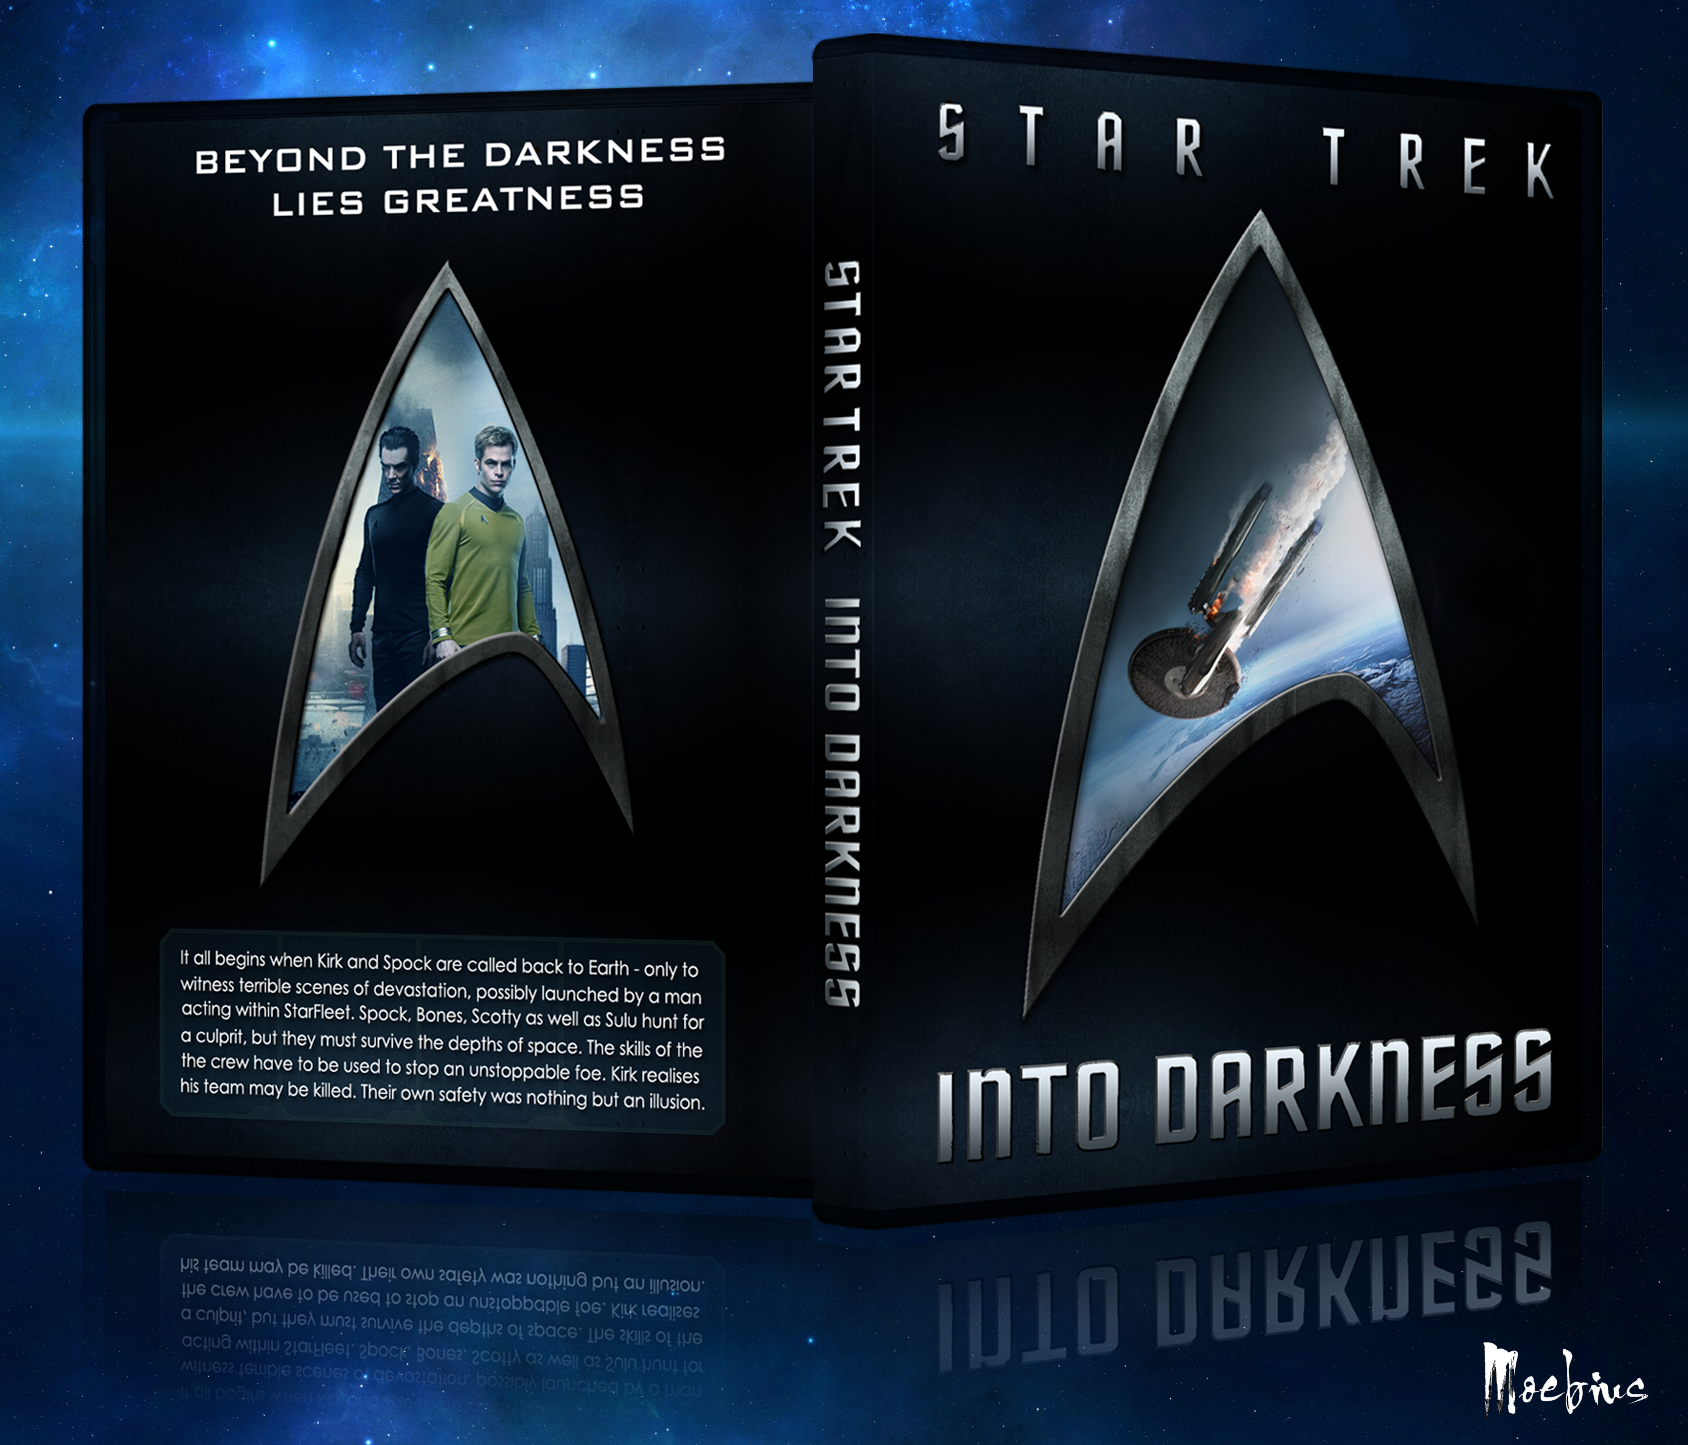 Star Trek Into Darkness box cover